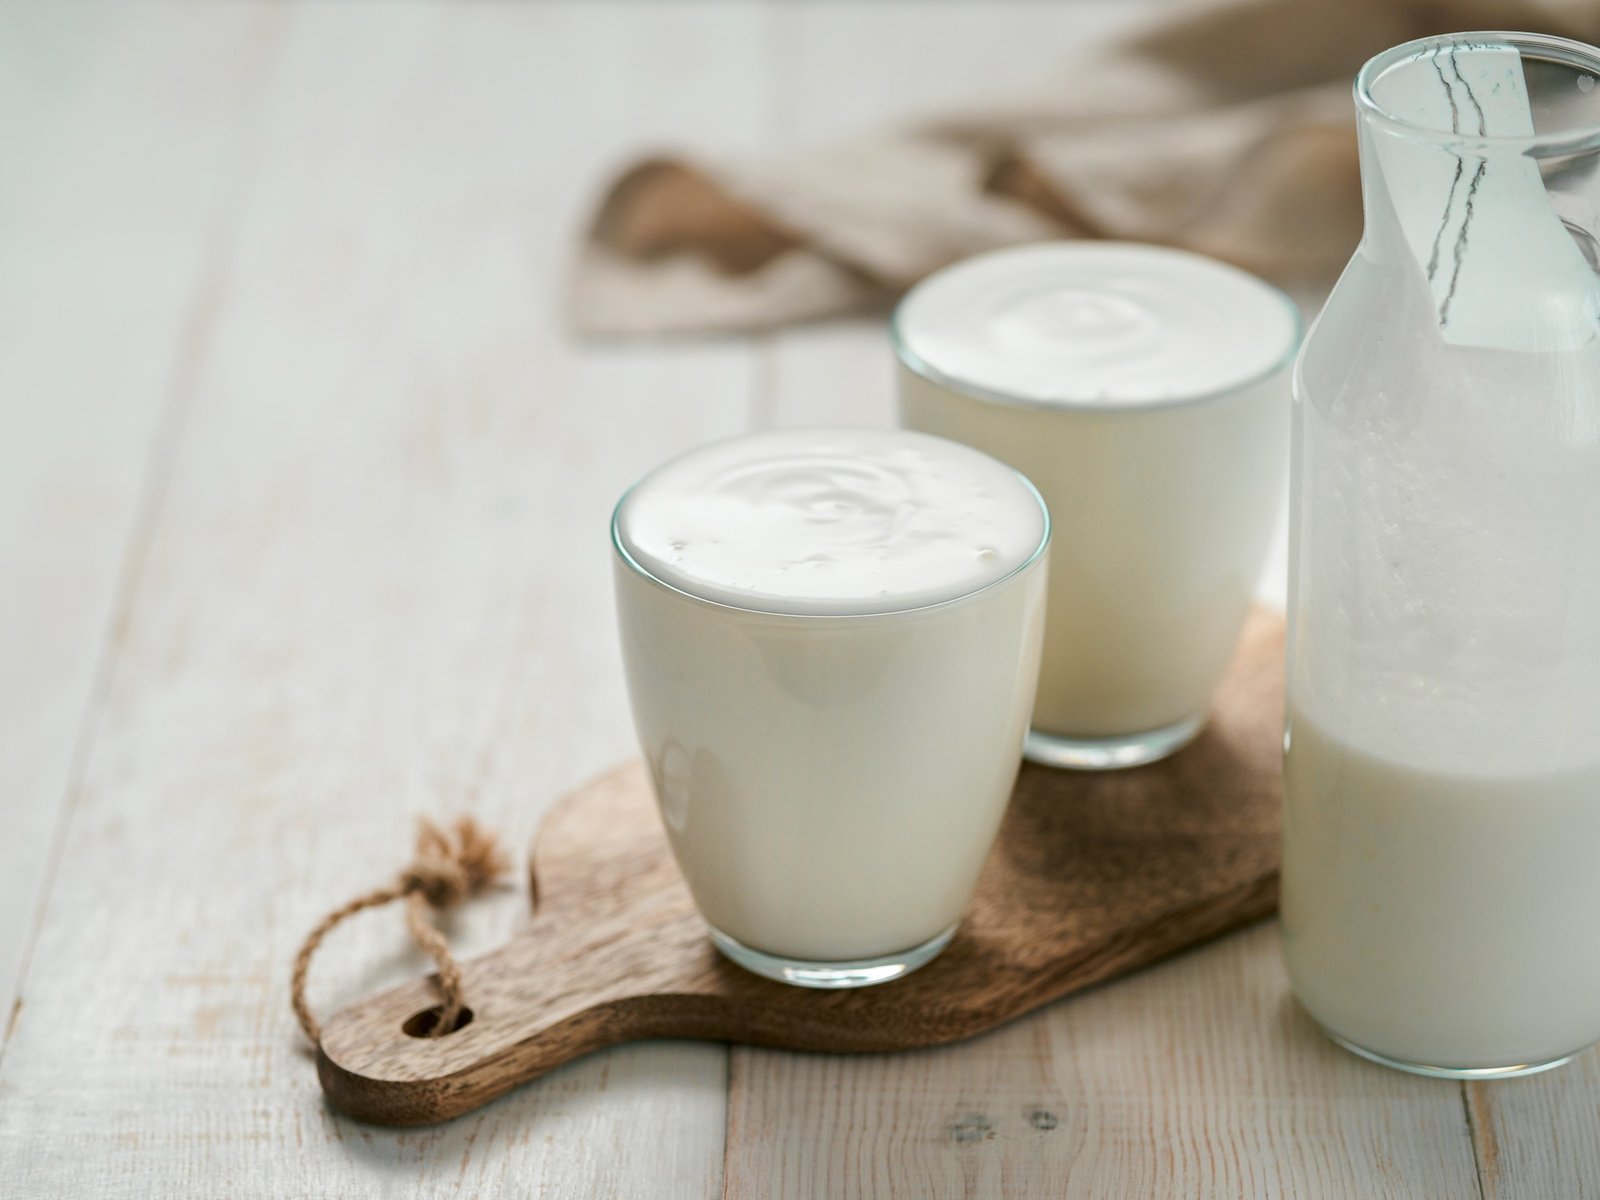 Kefir, buttermilk or yogurt with probiotics